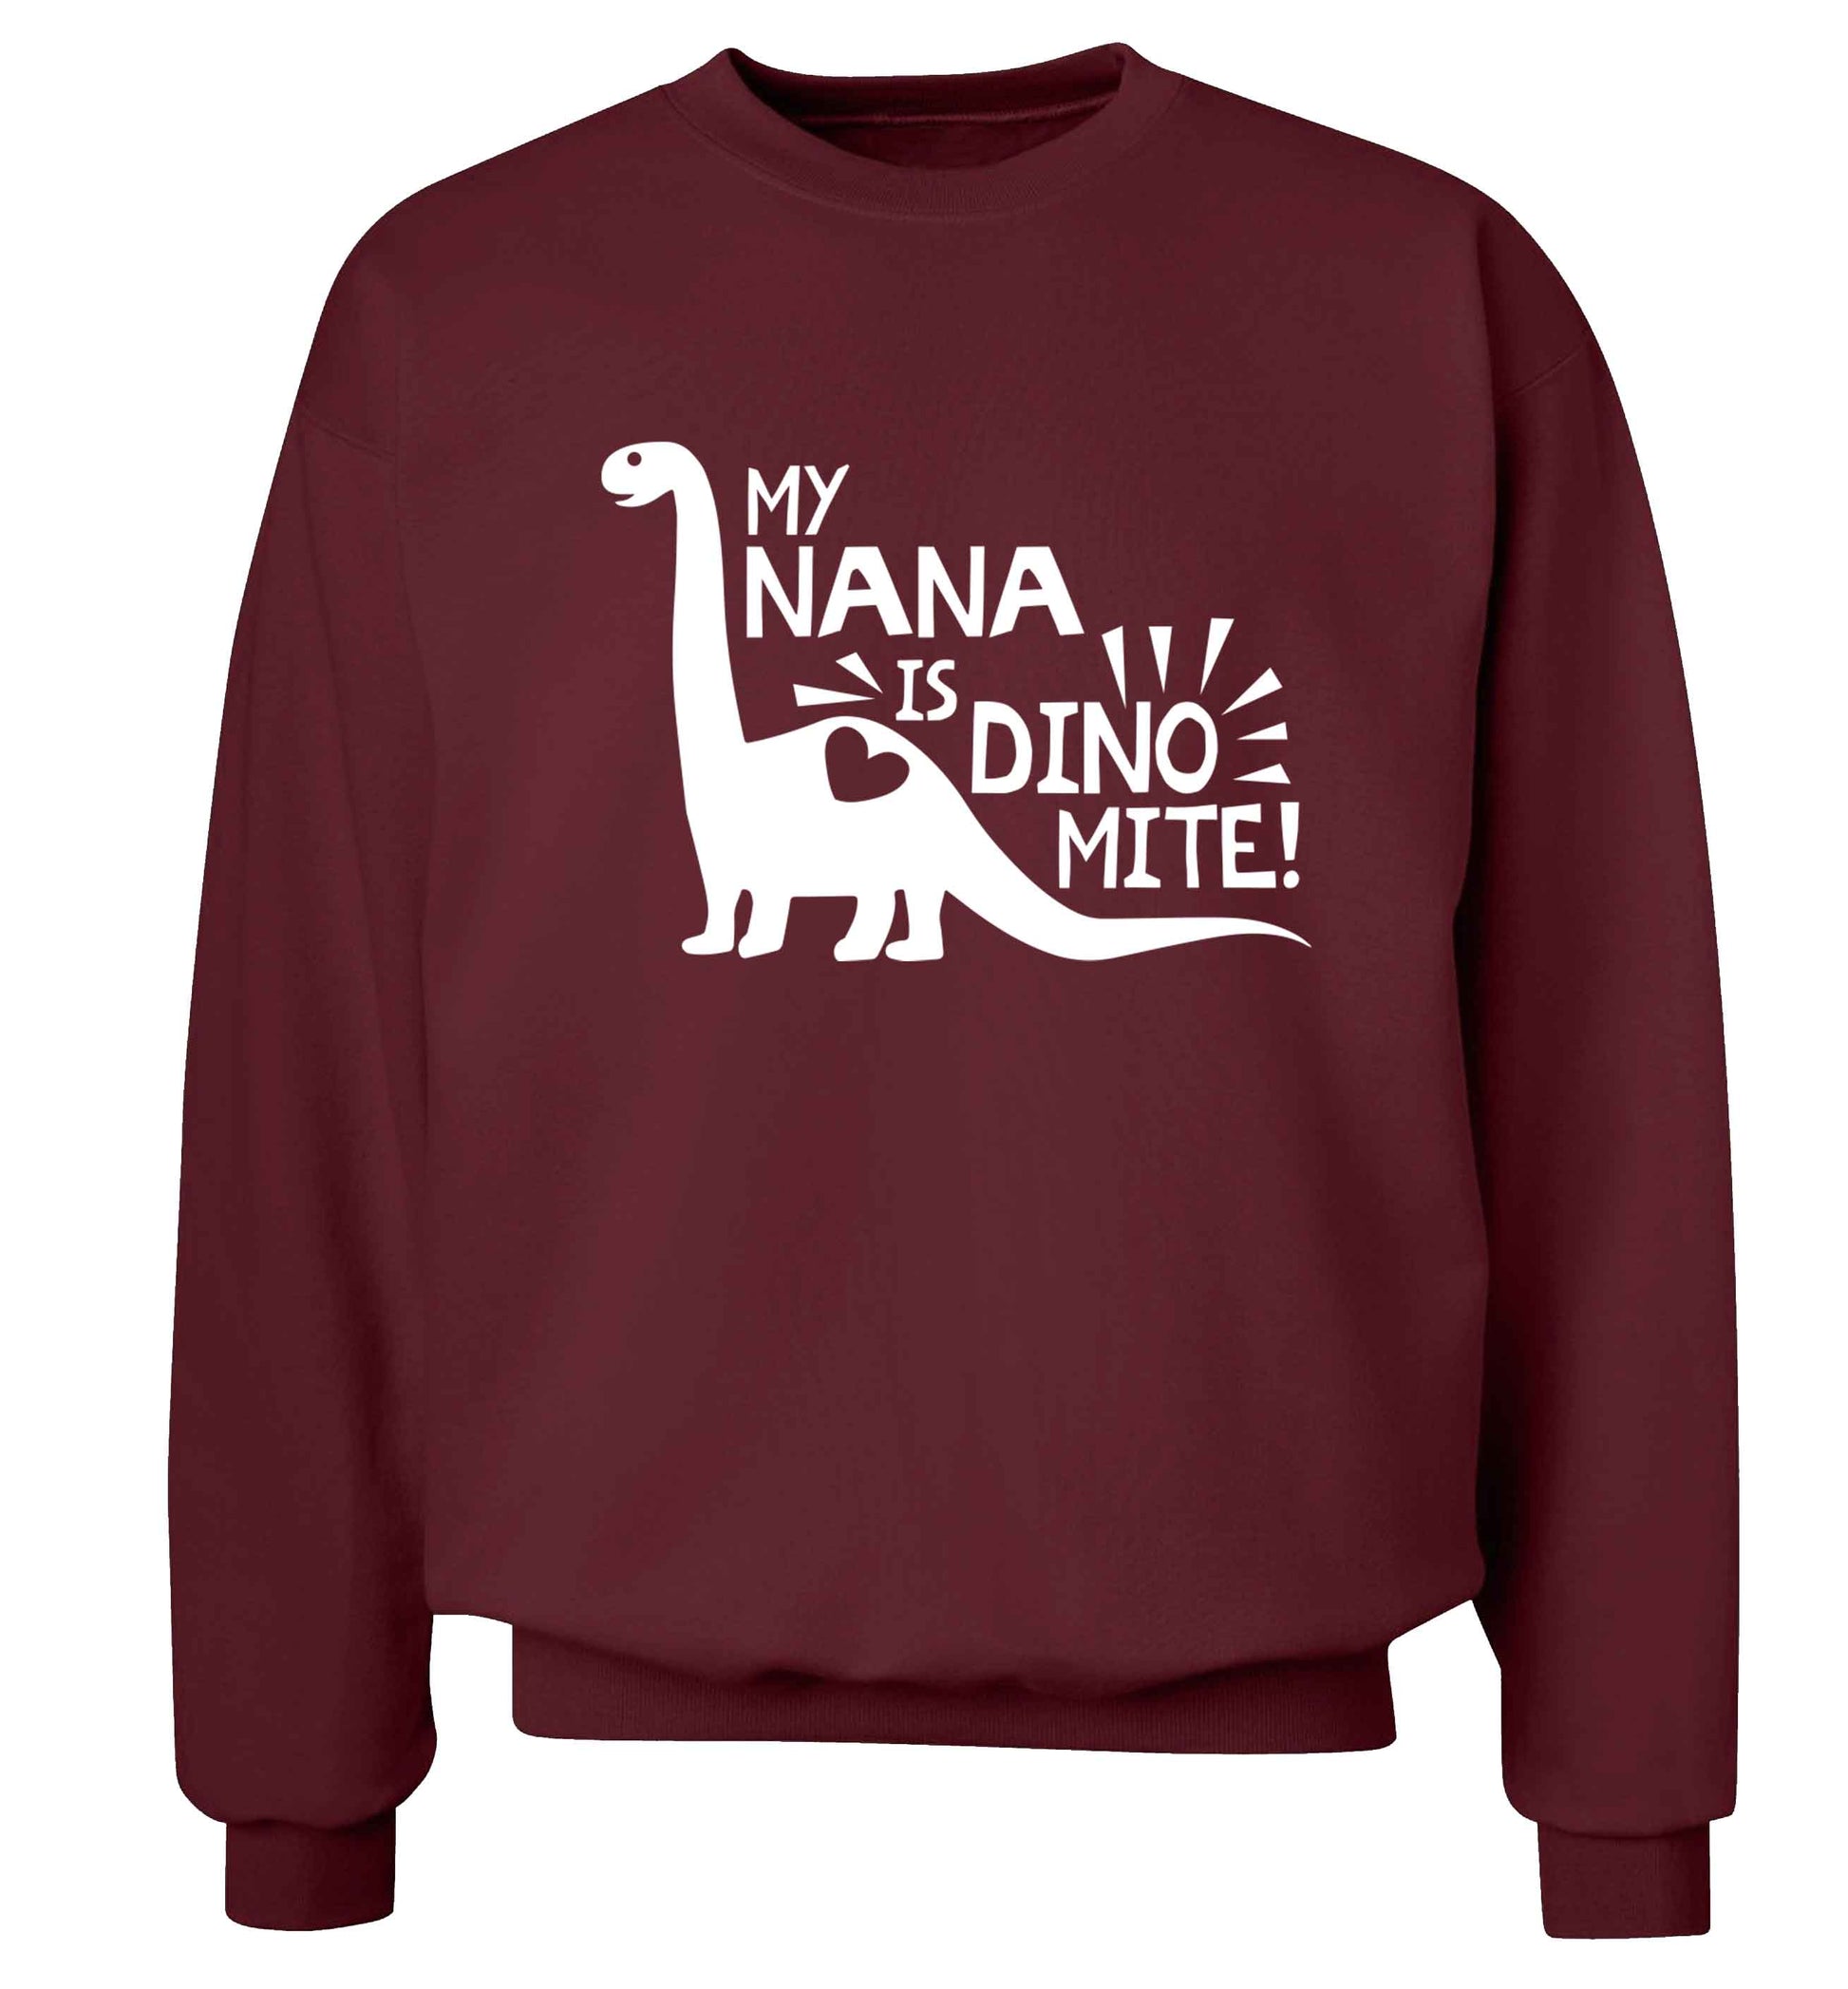 My nana is dinomite! Adult's unisex maroon Sweater 2XL